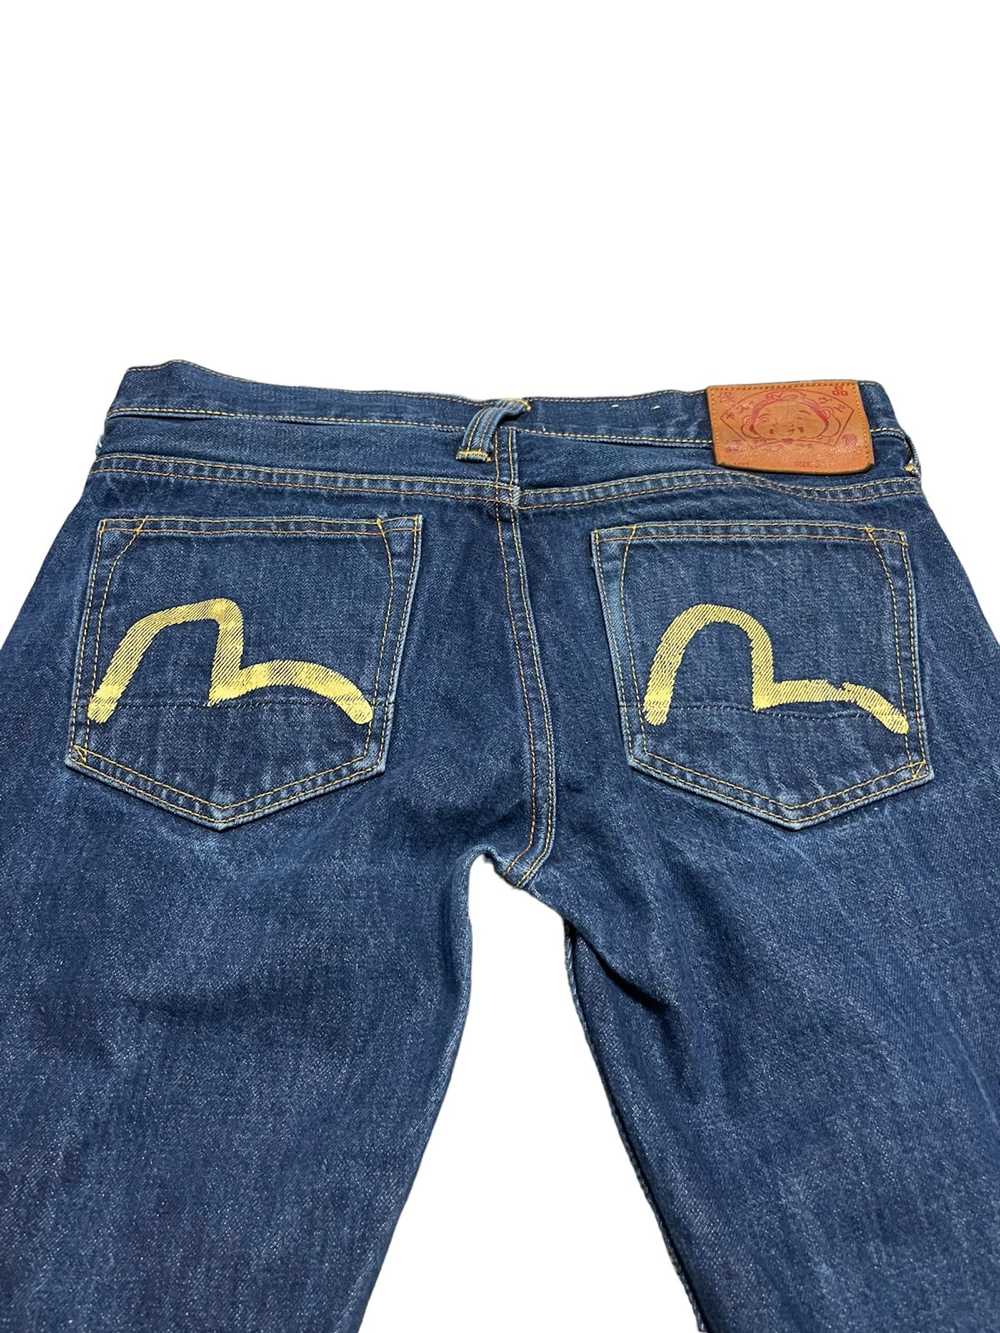 Evisu Vintage Evisu denim jeans - image 5